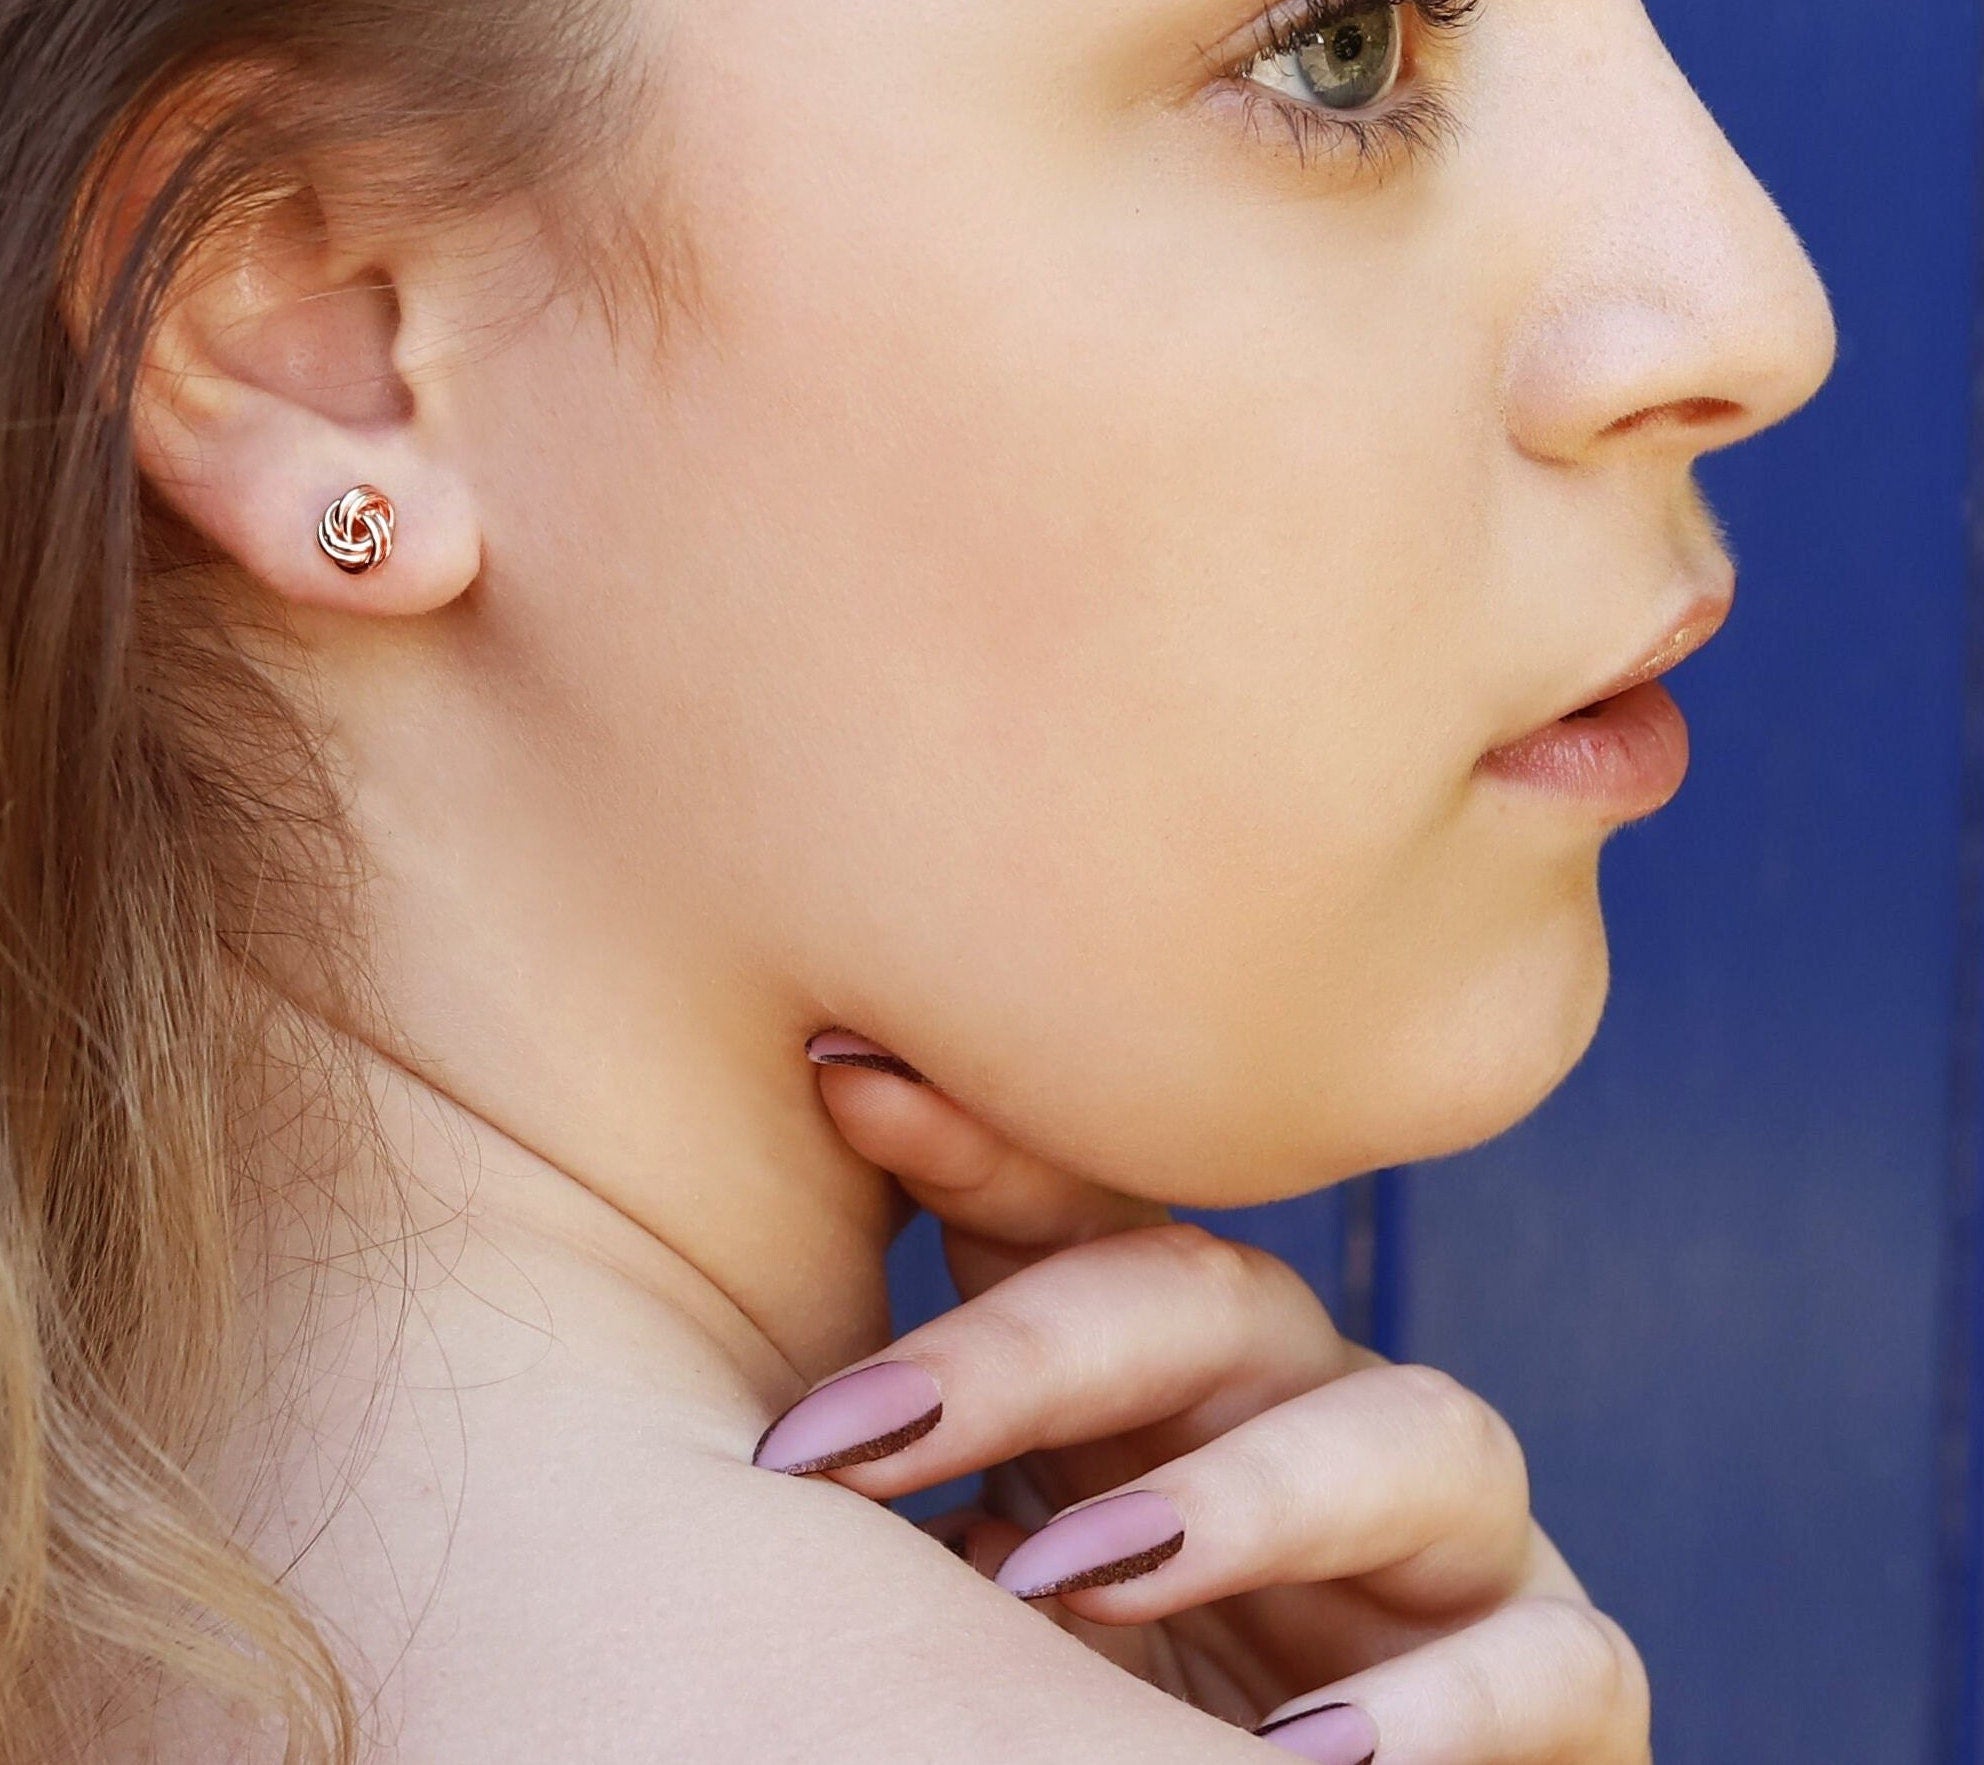 Tiny Stud Earrings - New Minimalist Earrings - Minimalist Earrings- Knot Studs - Tiny Earrings - Earrings Sets for Multiple Piercings